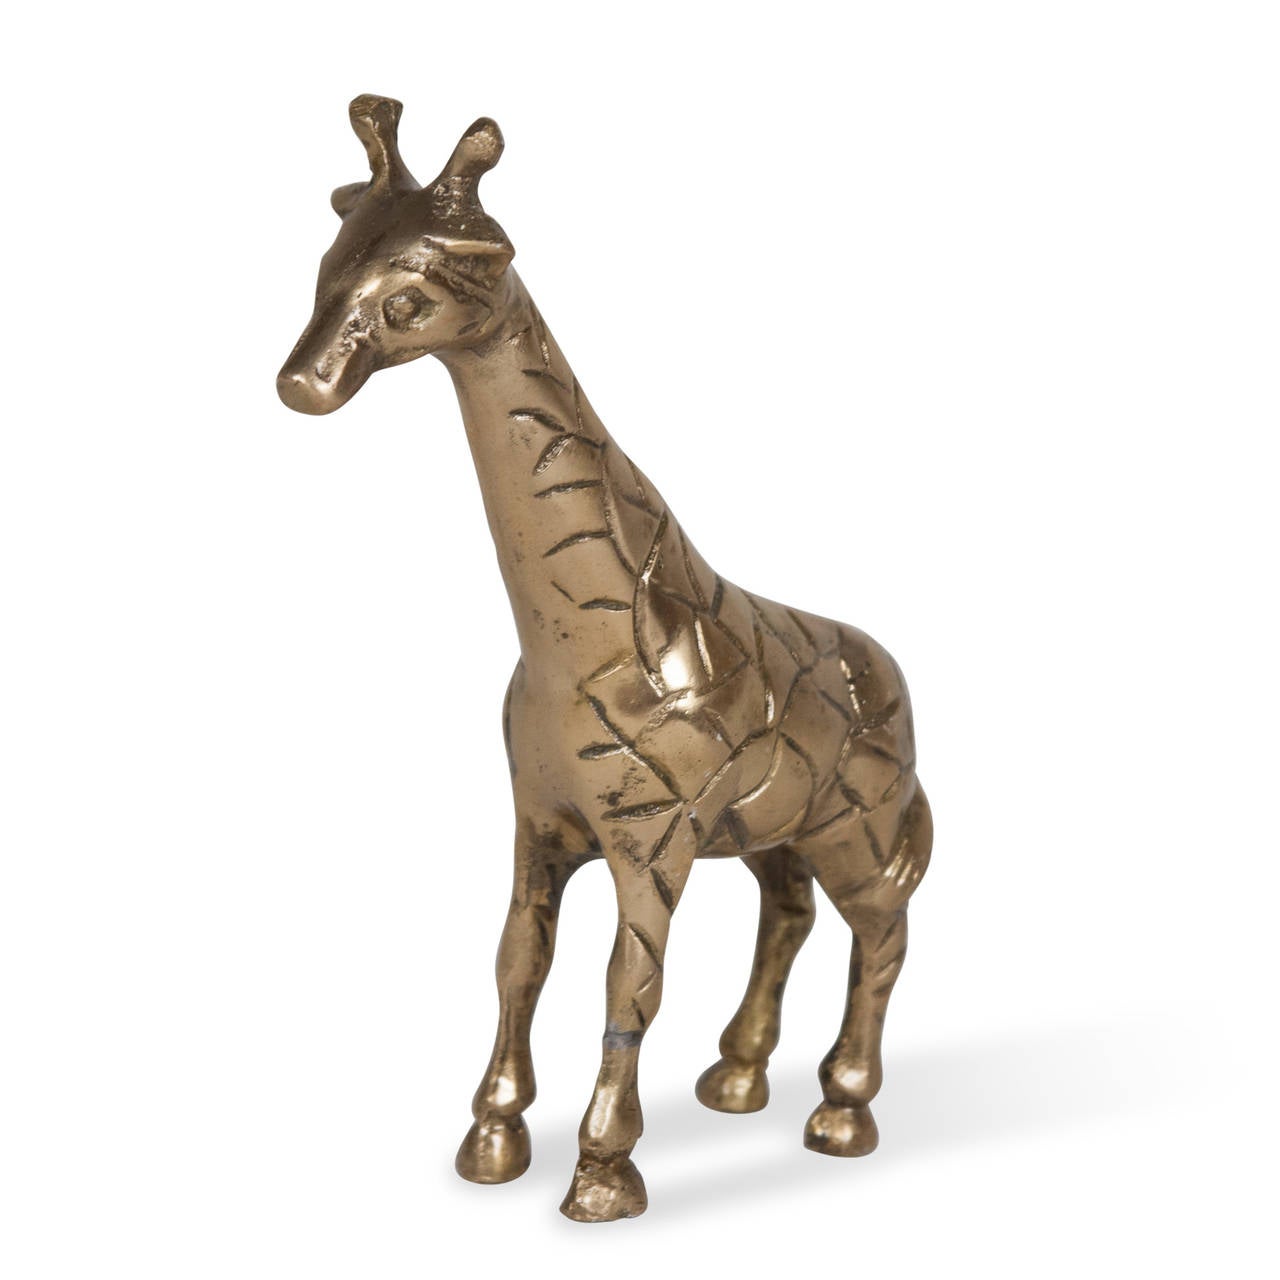 Bronze giraffe sculpture, American 1970s. Height 5 1/2 in, length 4 1/2 in, width 1 1/2 in. (Item #2361)